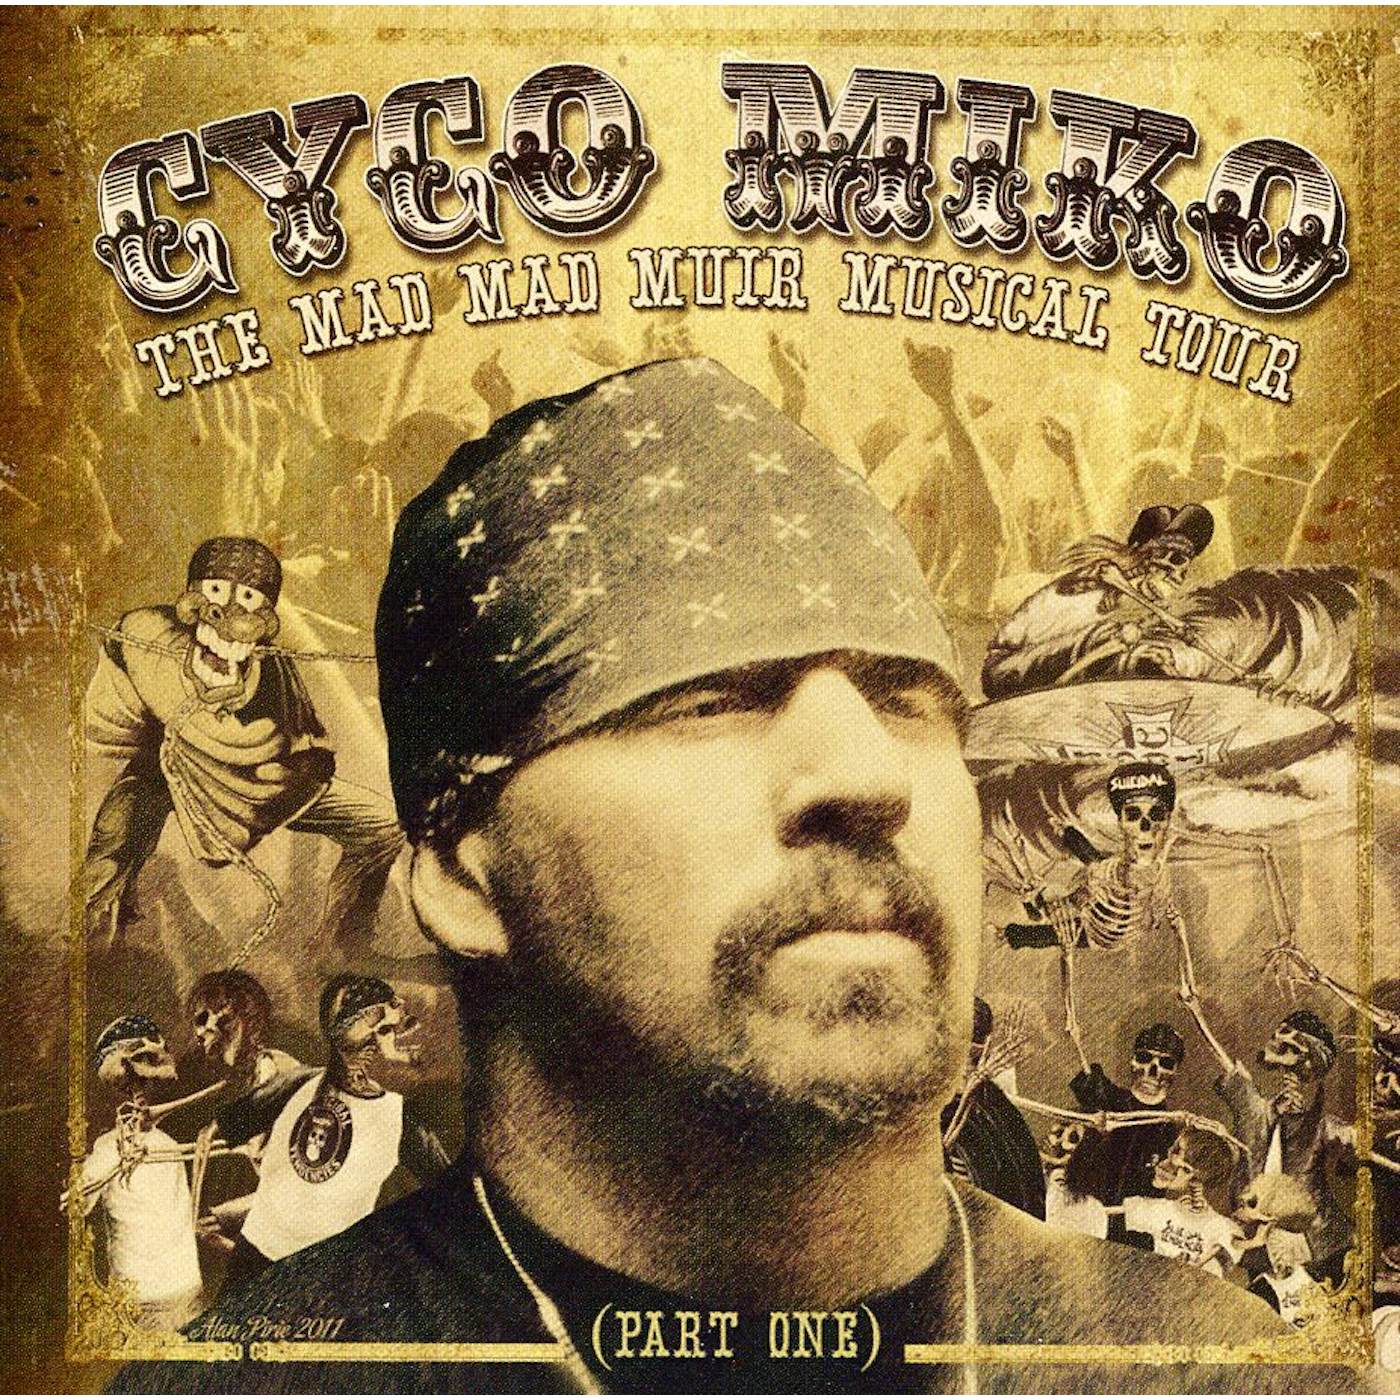 Cyco Miko MAD MAD MUIR MUSICAL TOUR CD